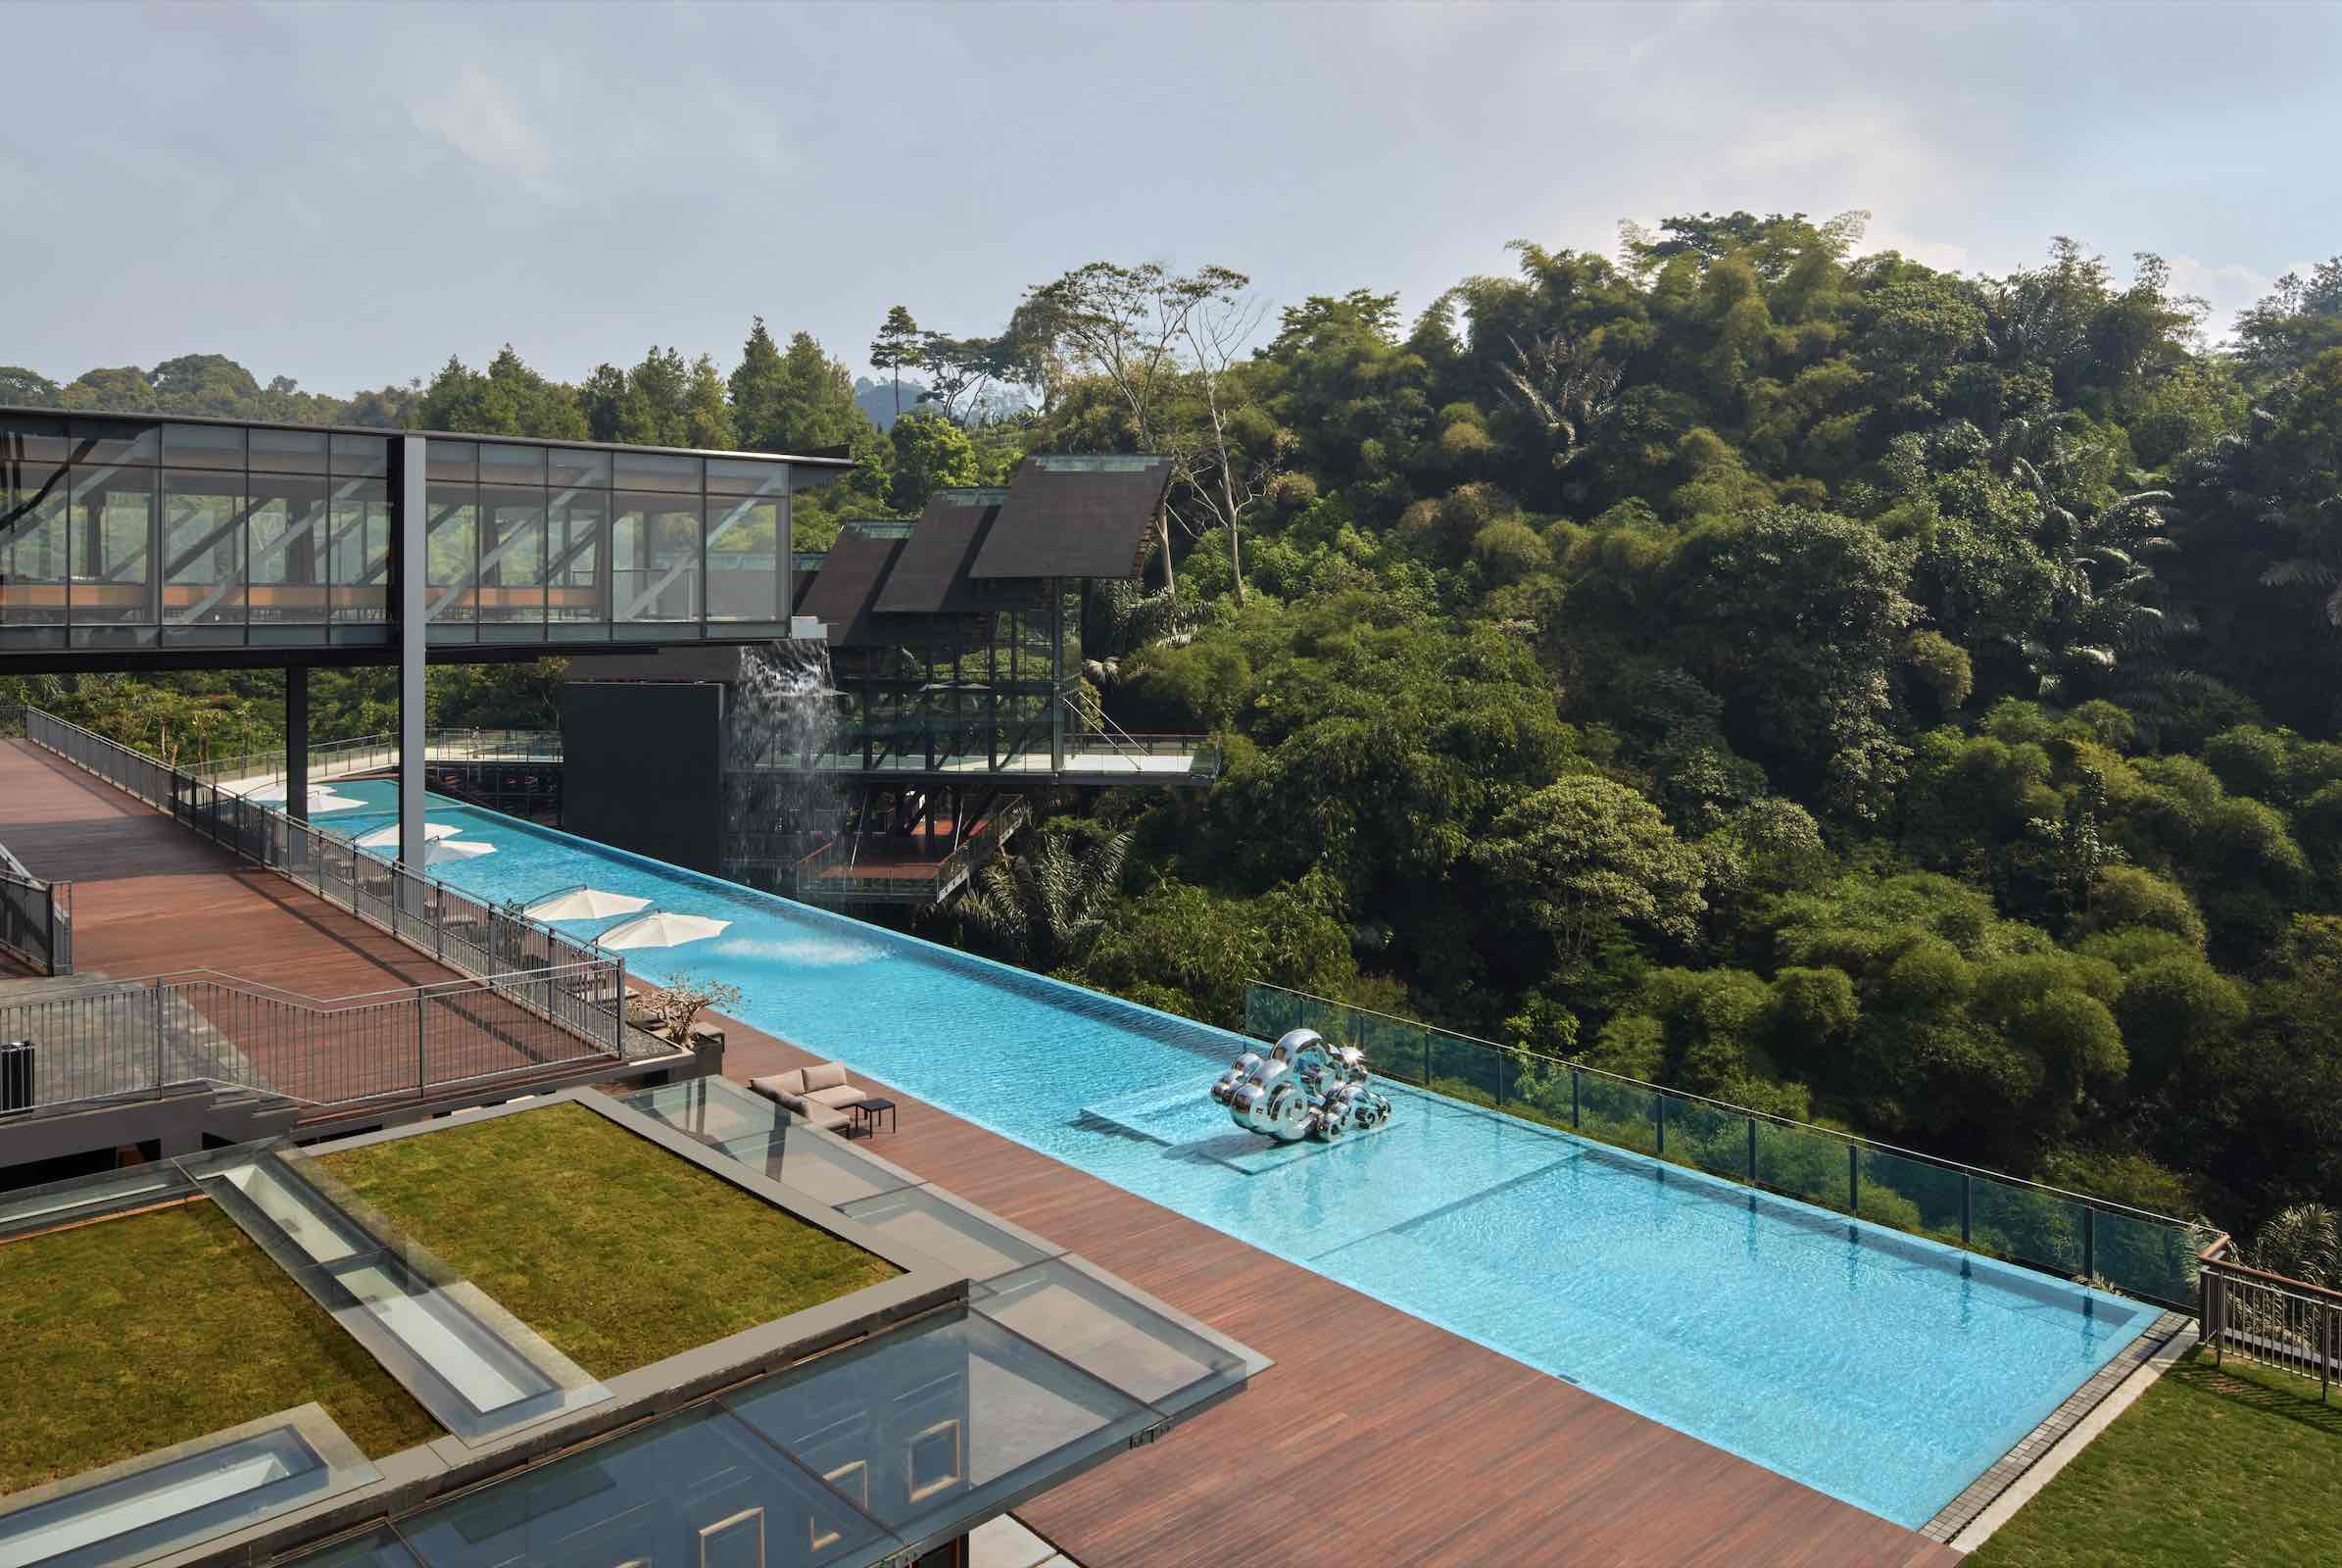  Rekomendasi Hotel yang Baru, Unik dan Menarik di Bandung